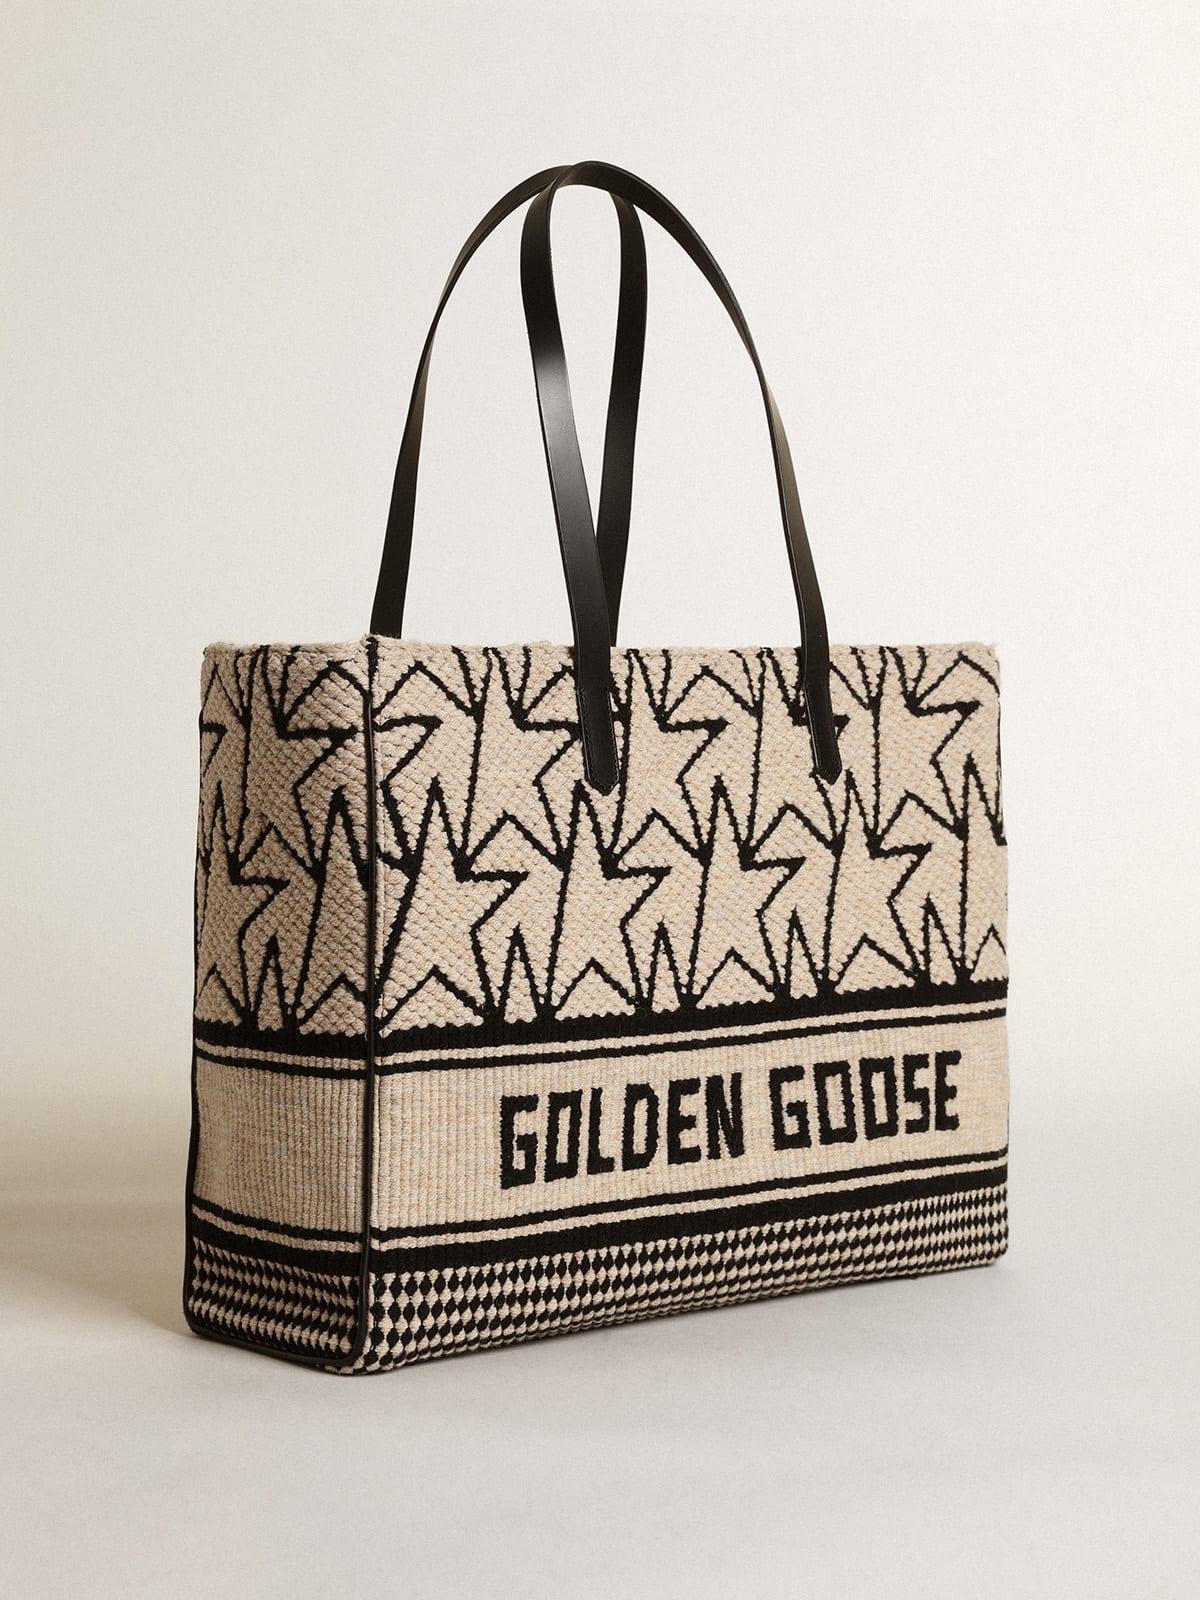 Golden Goose - Women's California Bag East-West in milk-white jacquard wool in 